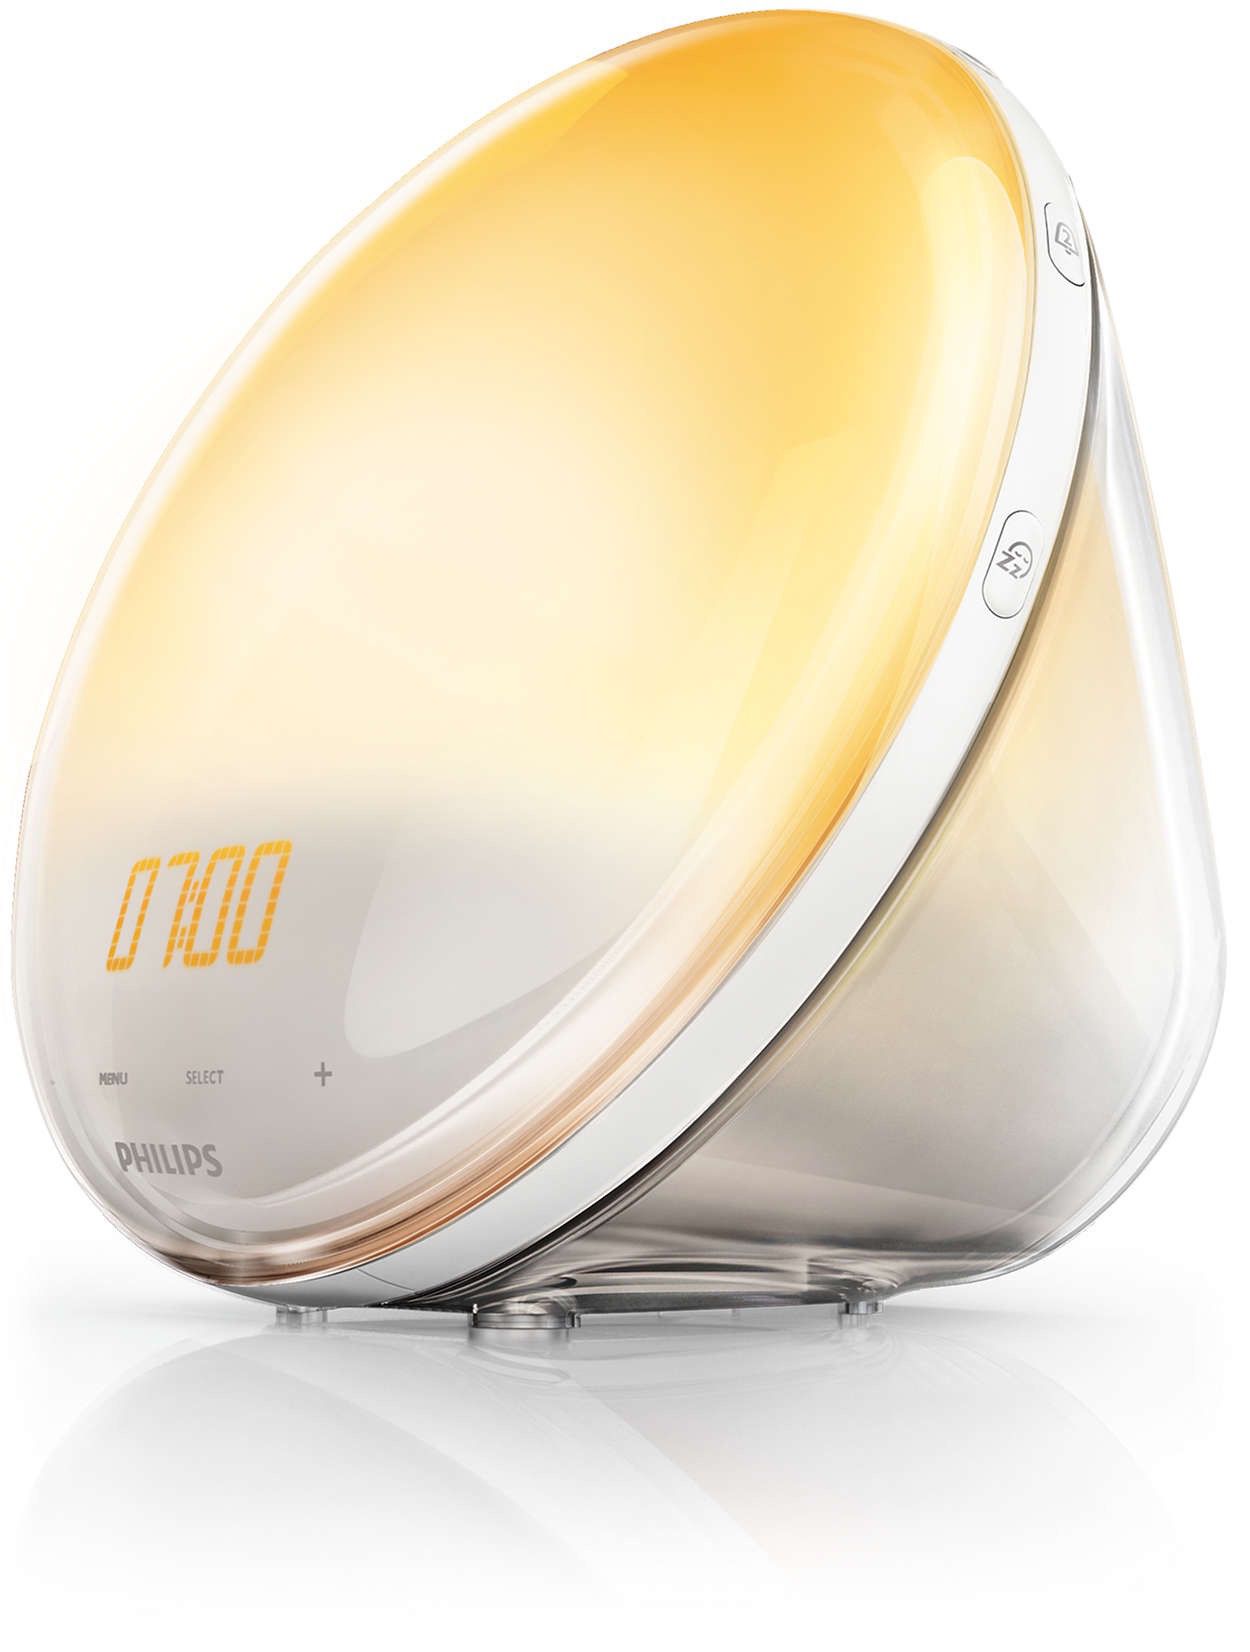 Philips Wake-Up Light Alarm Clock with Sunrise Simulation and Sunset Fading Night Light, White (HF3510).